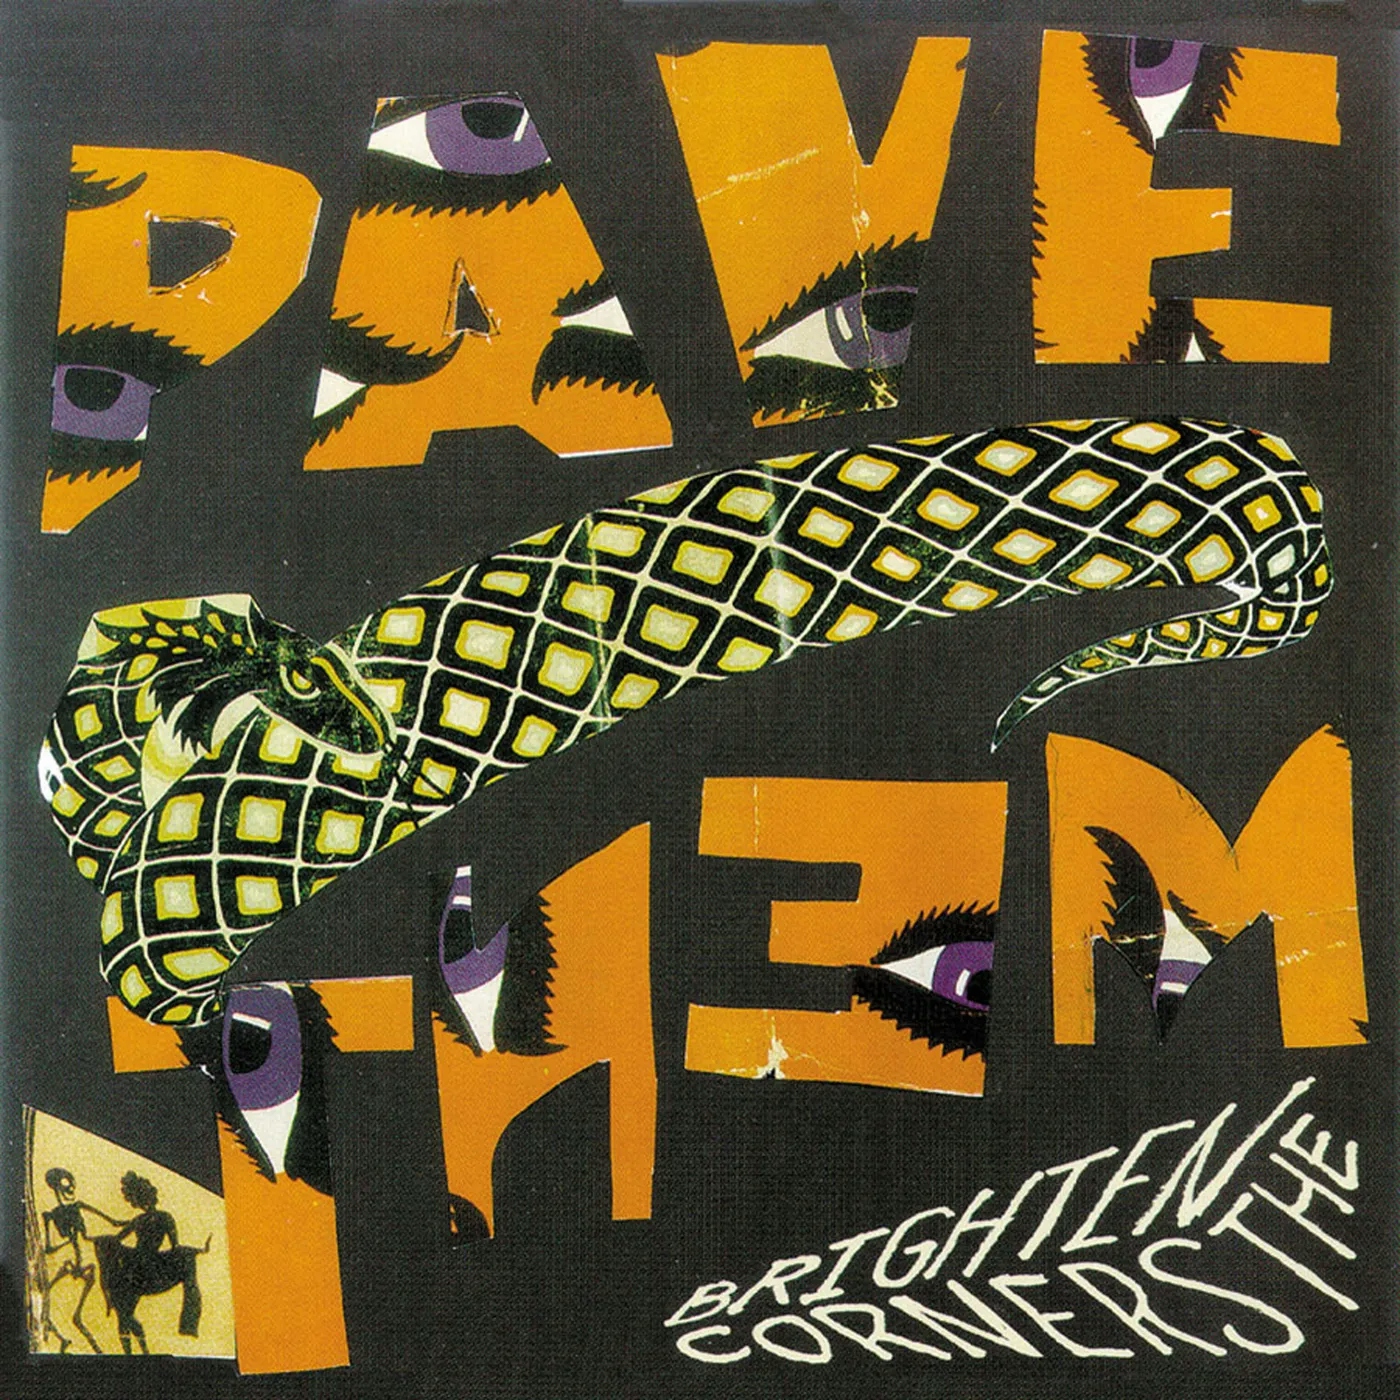 Album artwork for Album artwork for Brighten The Corners by Pavement by Brighten The Corners - Pavement